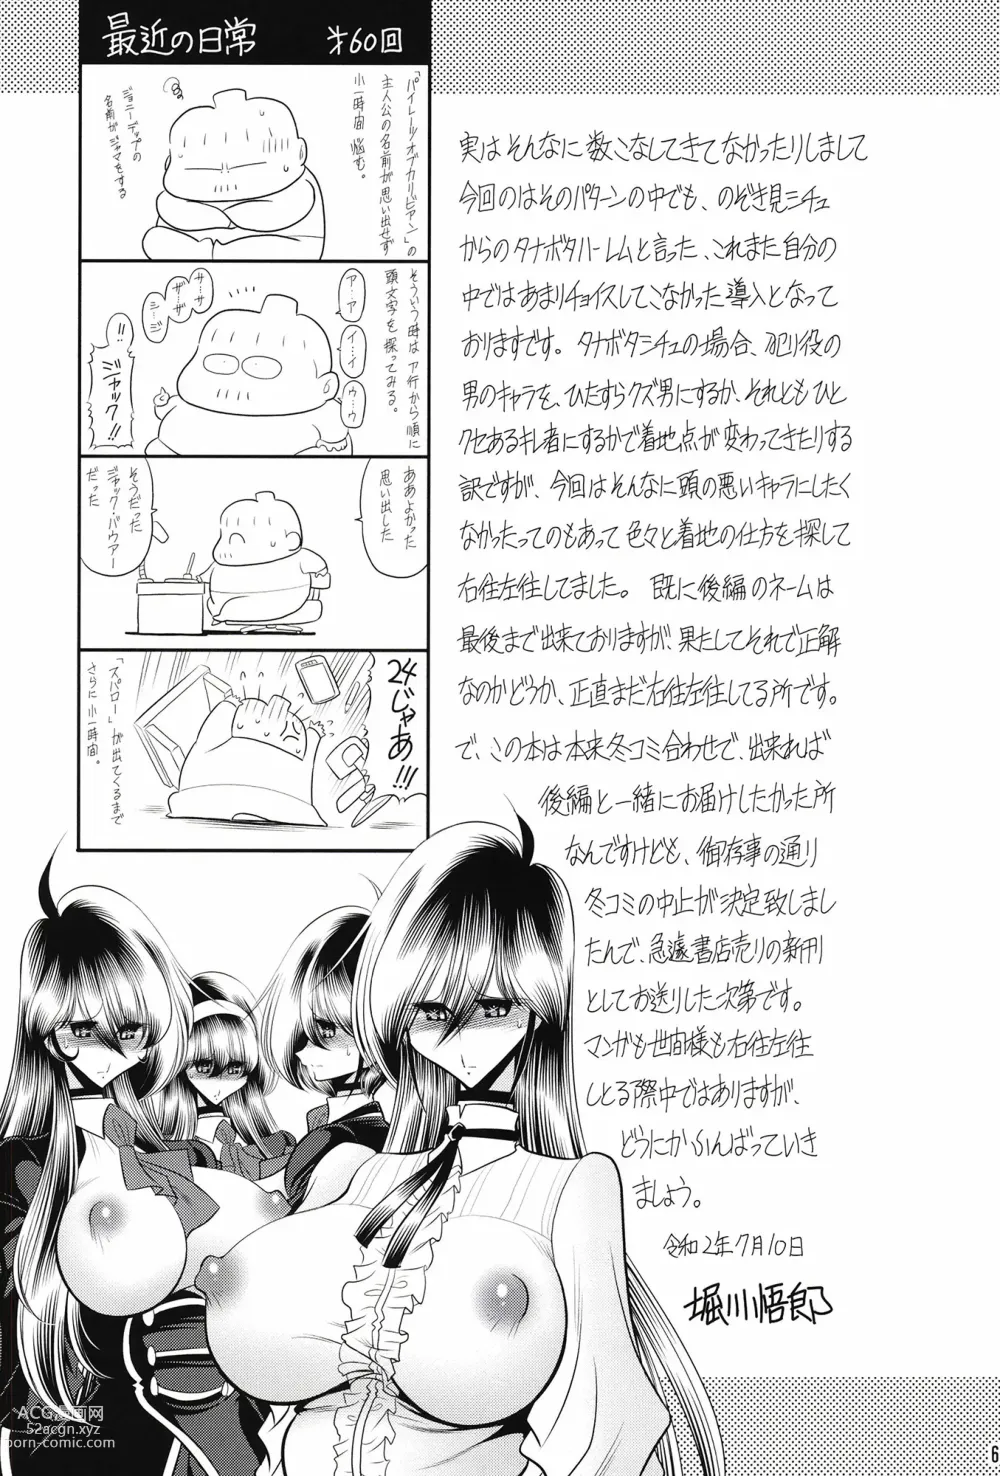 Page 61 of doujinshi 비밀의 화원 상권